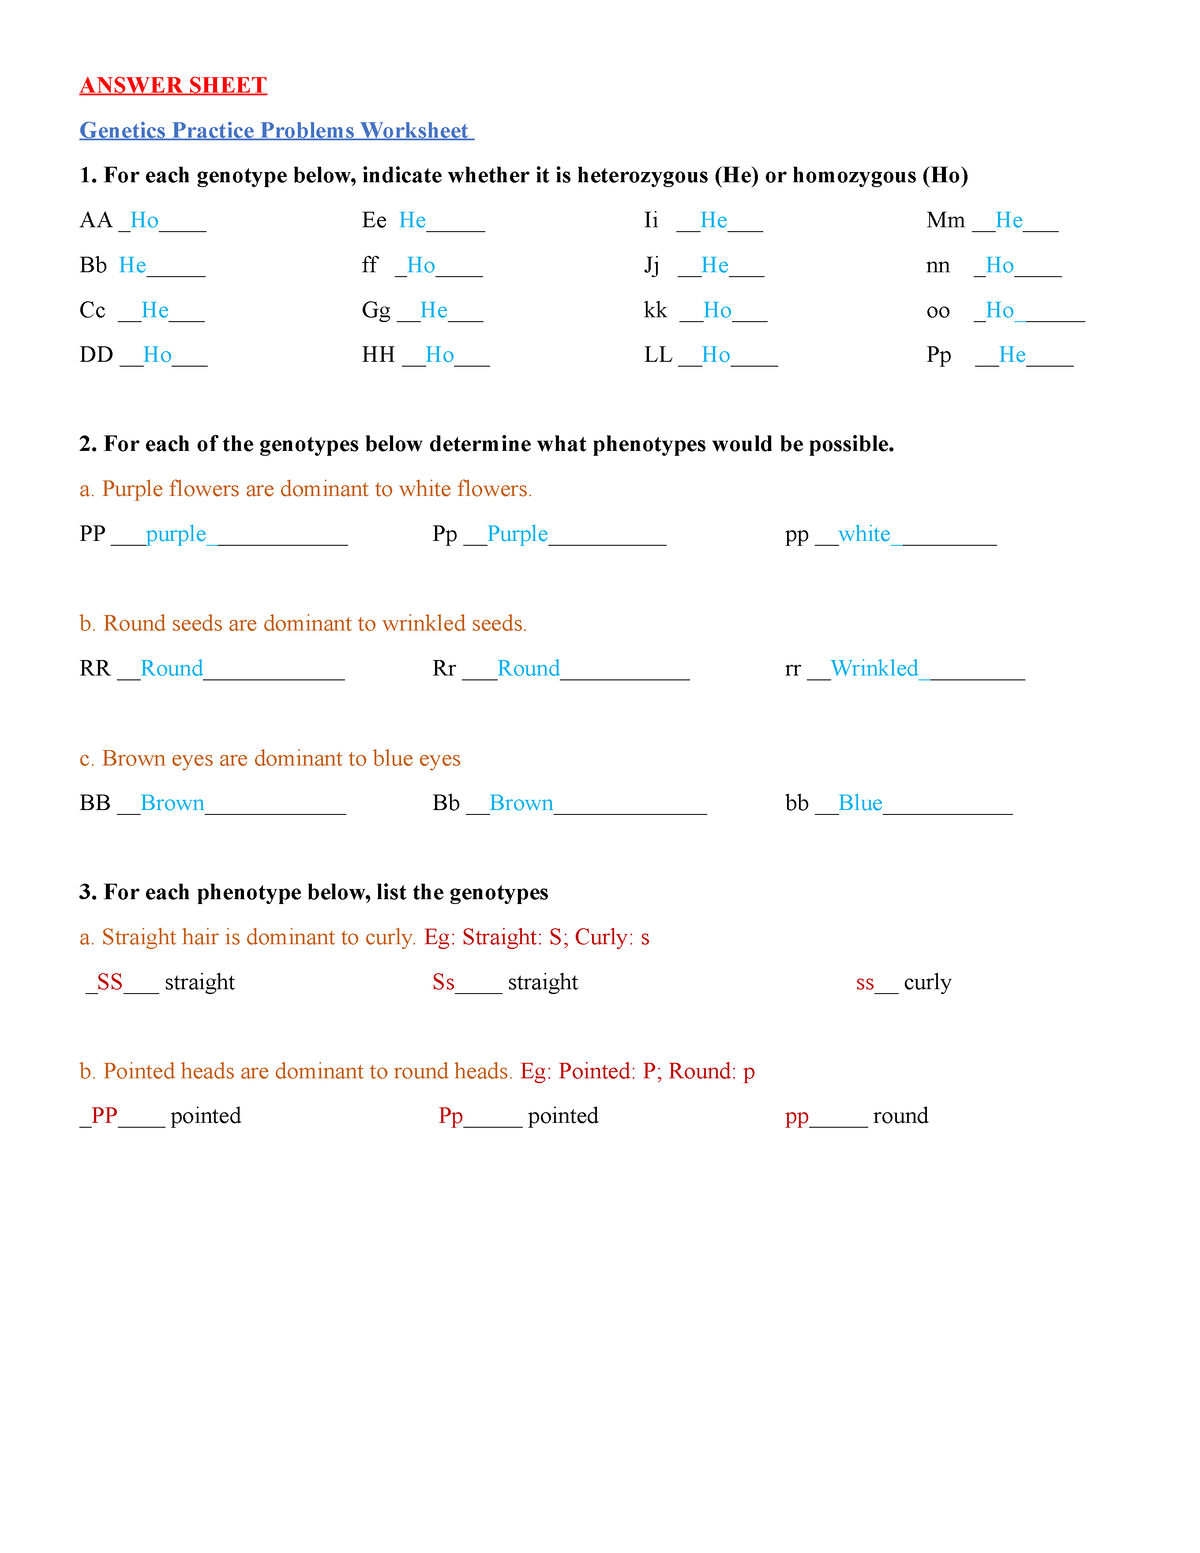 (13) Genetics Practice Problems Worksheet homework answers ANSWER